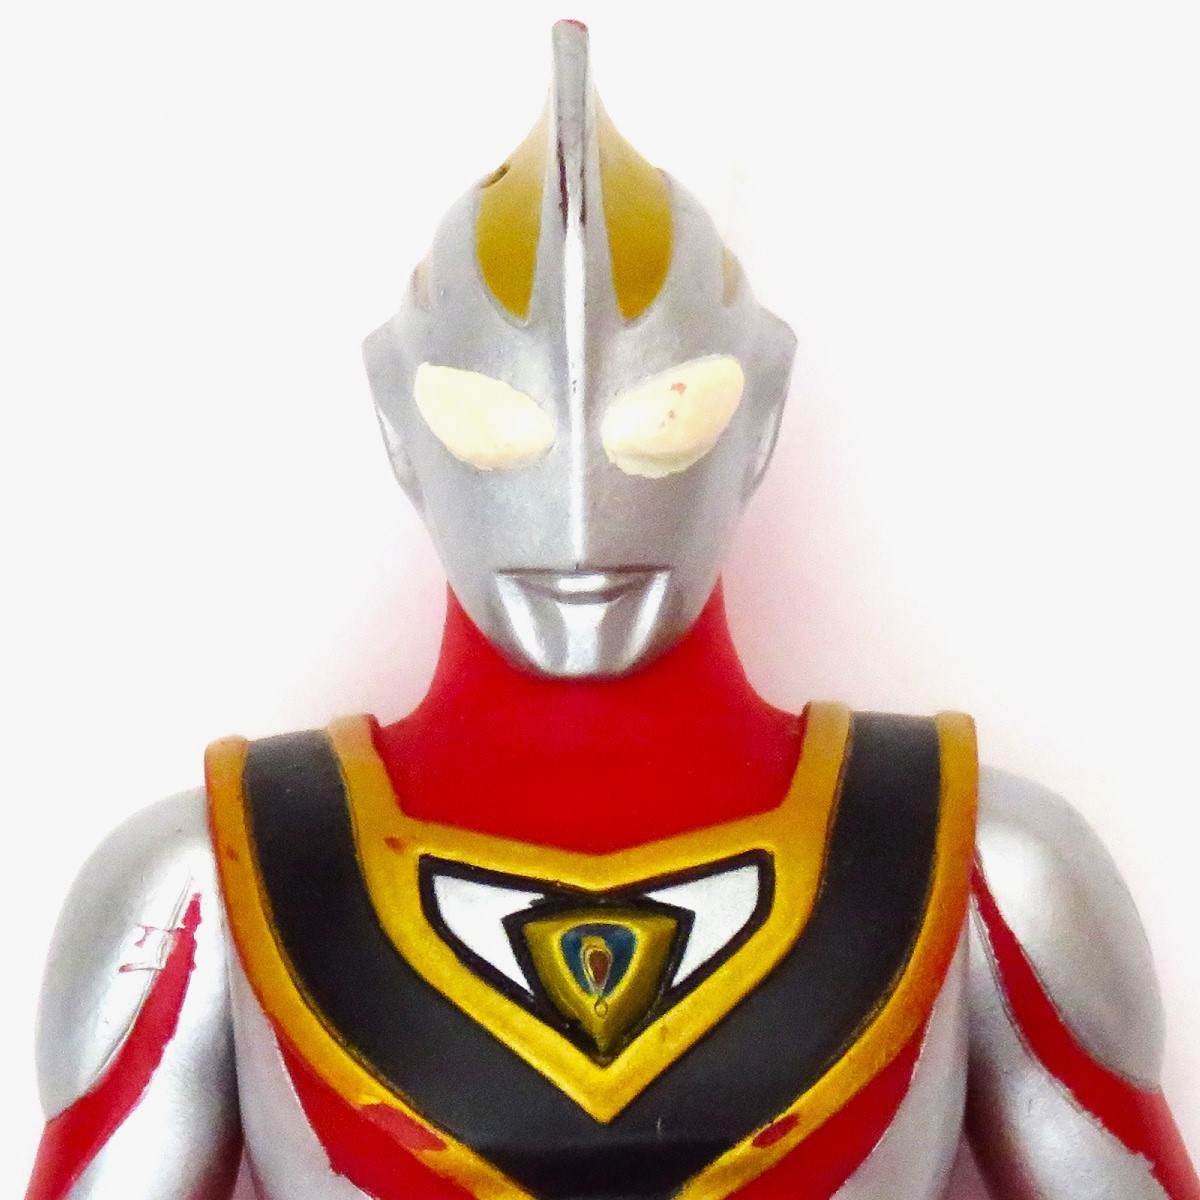  Bandai BANDAI Ultra герой серии 09 Ultraman Gaya (V2) sofvi примерно 14cm Ultra sofvi серии иен . Pro фигурка 